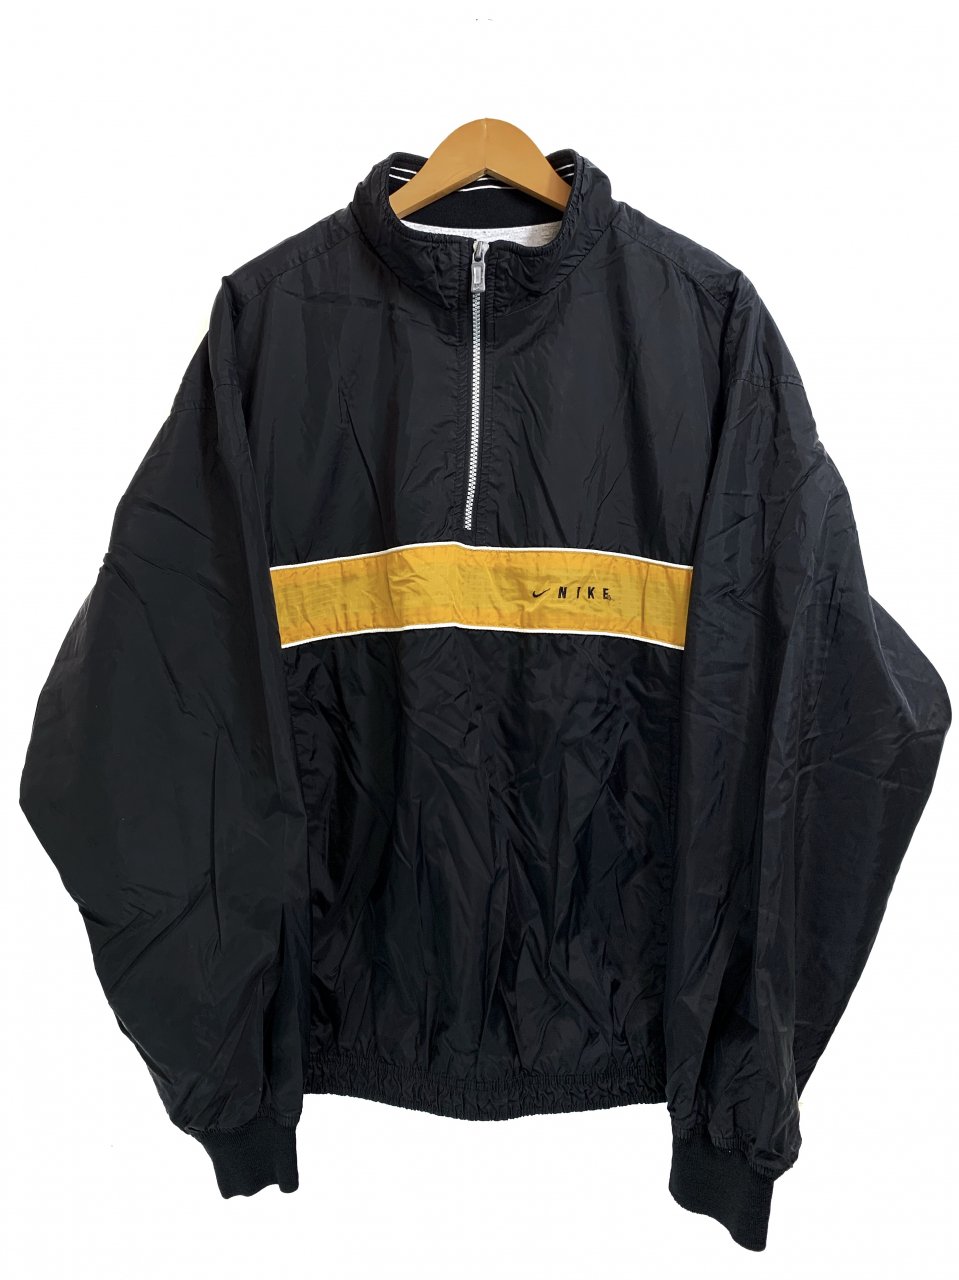 90s NIKE Half-Zip Nylon Pullover Jacket 黒黄 XL 銀タグ ナイキ ナイロンジャケット プルオーバー  ハーフジップ ロゴ 刺繍 ブラック イエロー - NEWJOKE ONLINE STORE